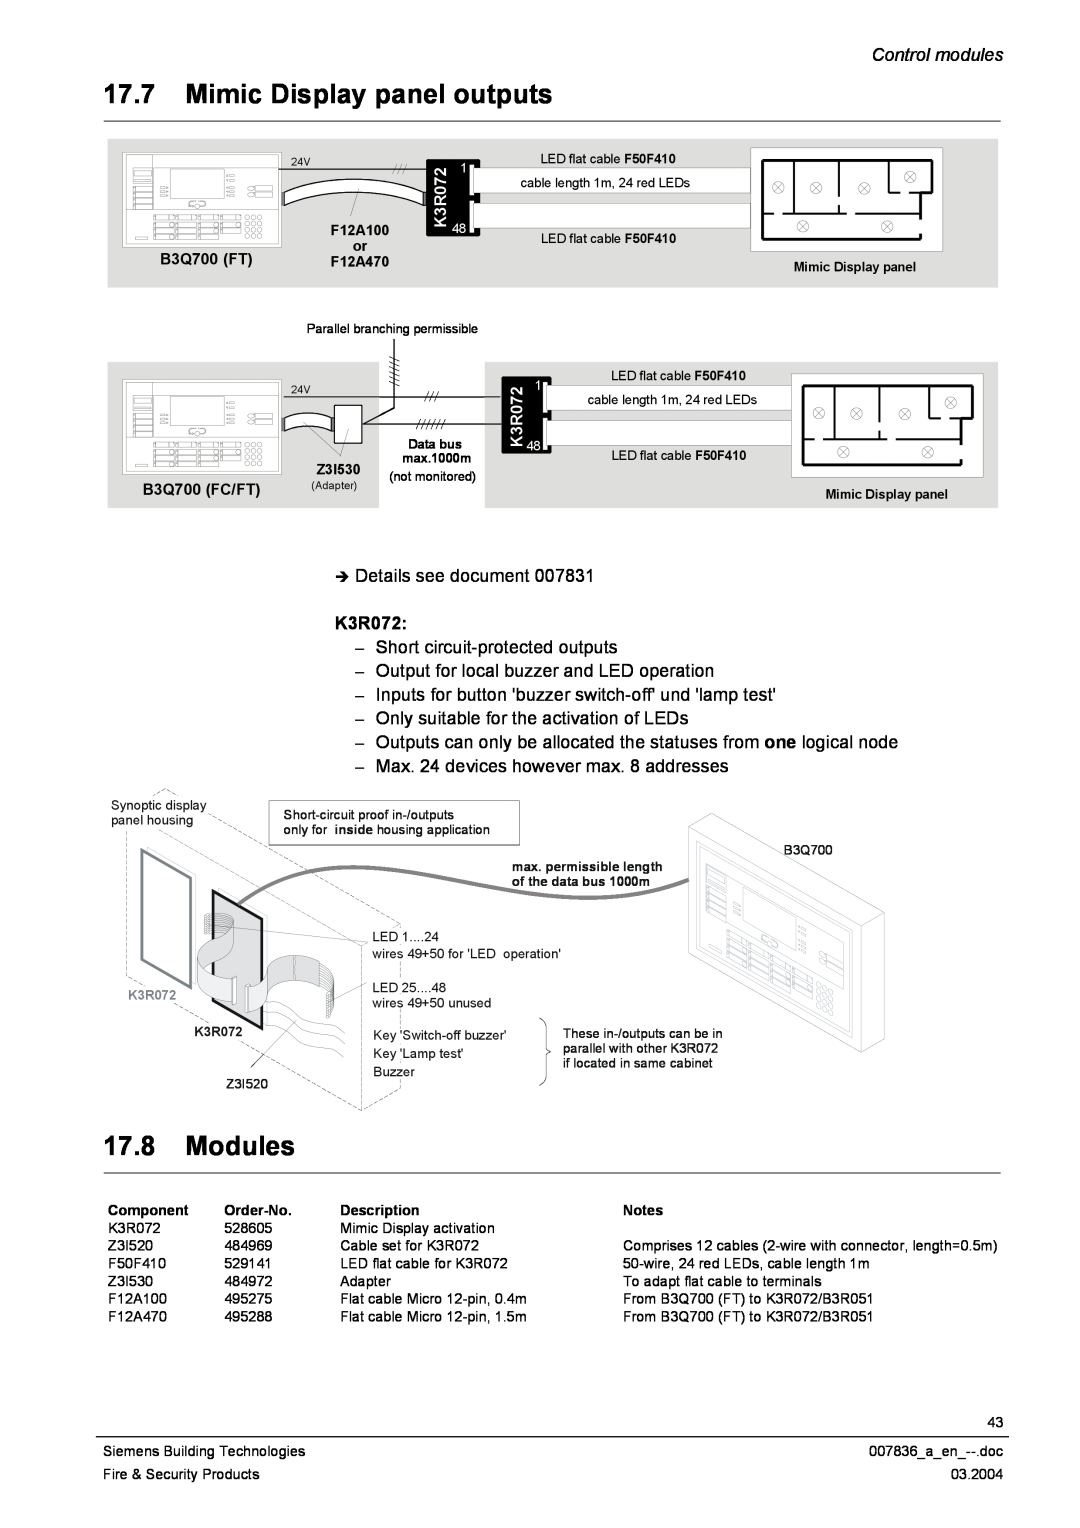 Siemens FC700A manual 17.7Mimic Display panel outputs, 17.8Modules, K3R072, Control modules 